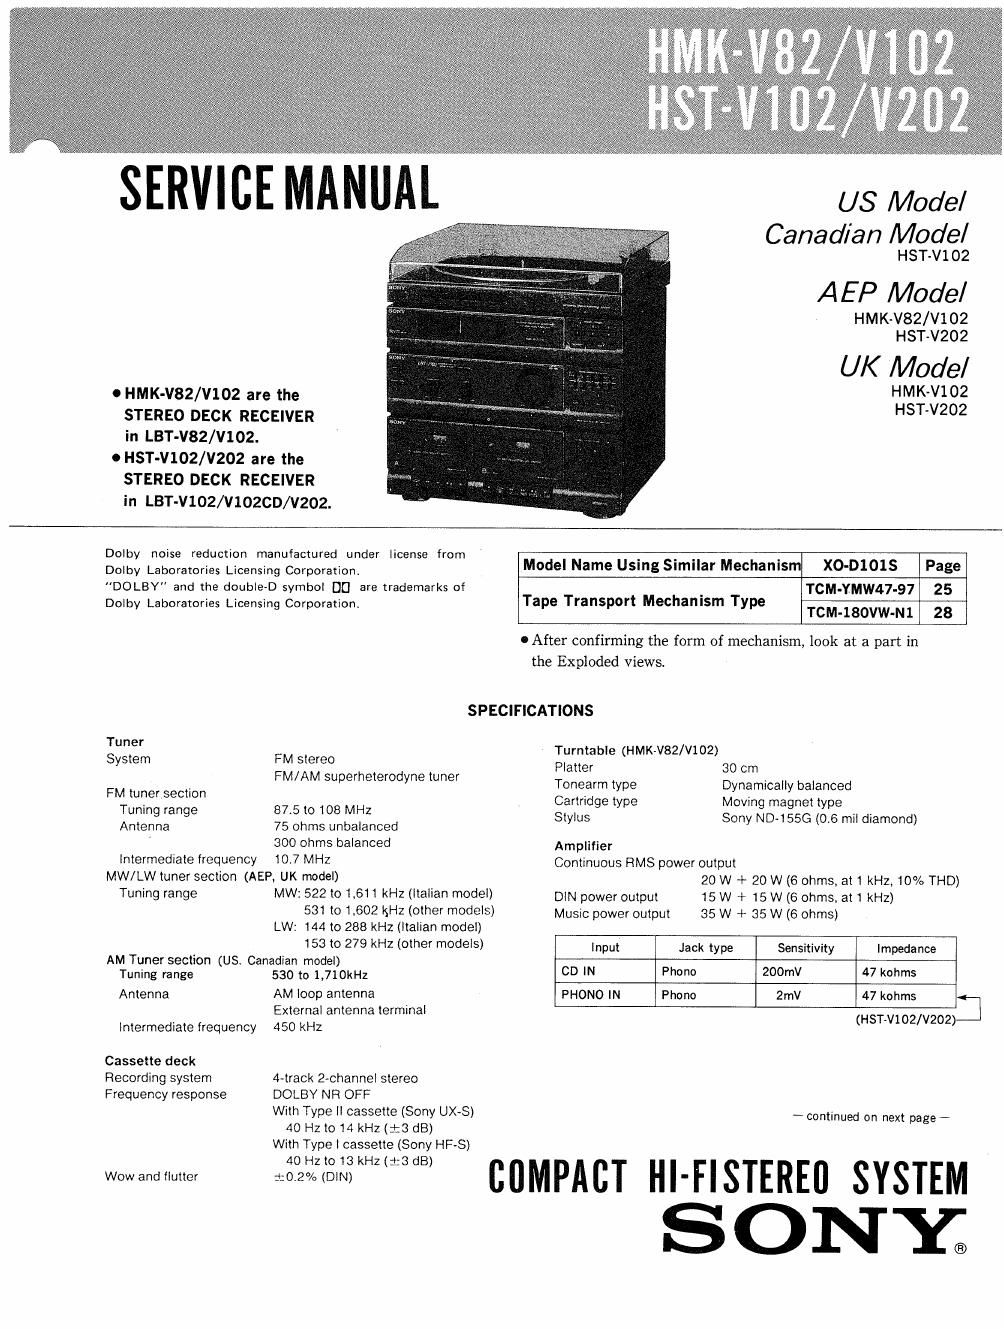 sony hmk v 82 service manual